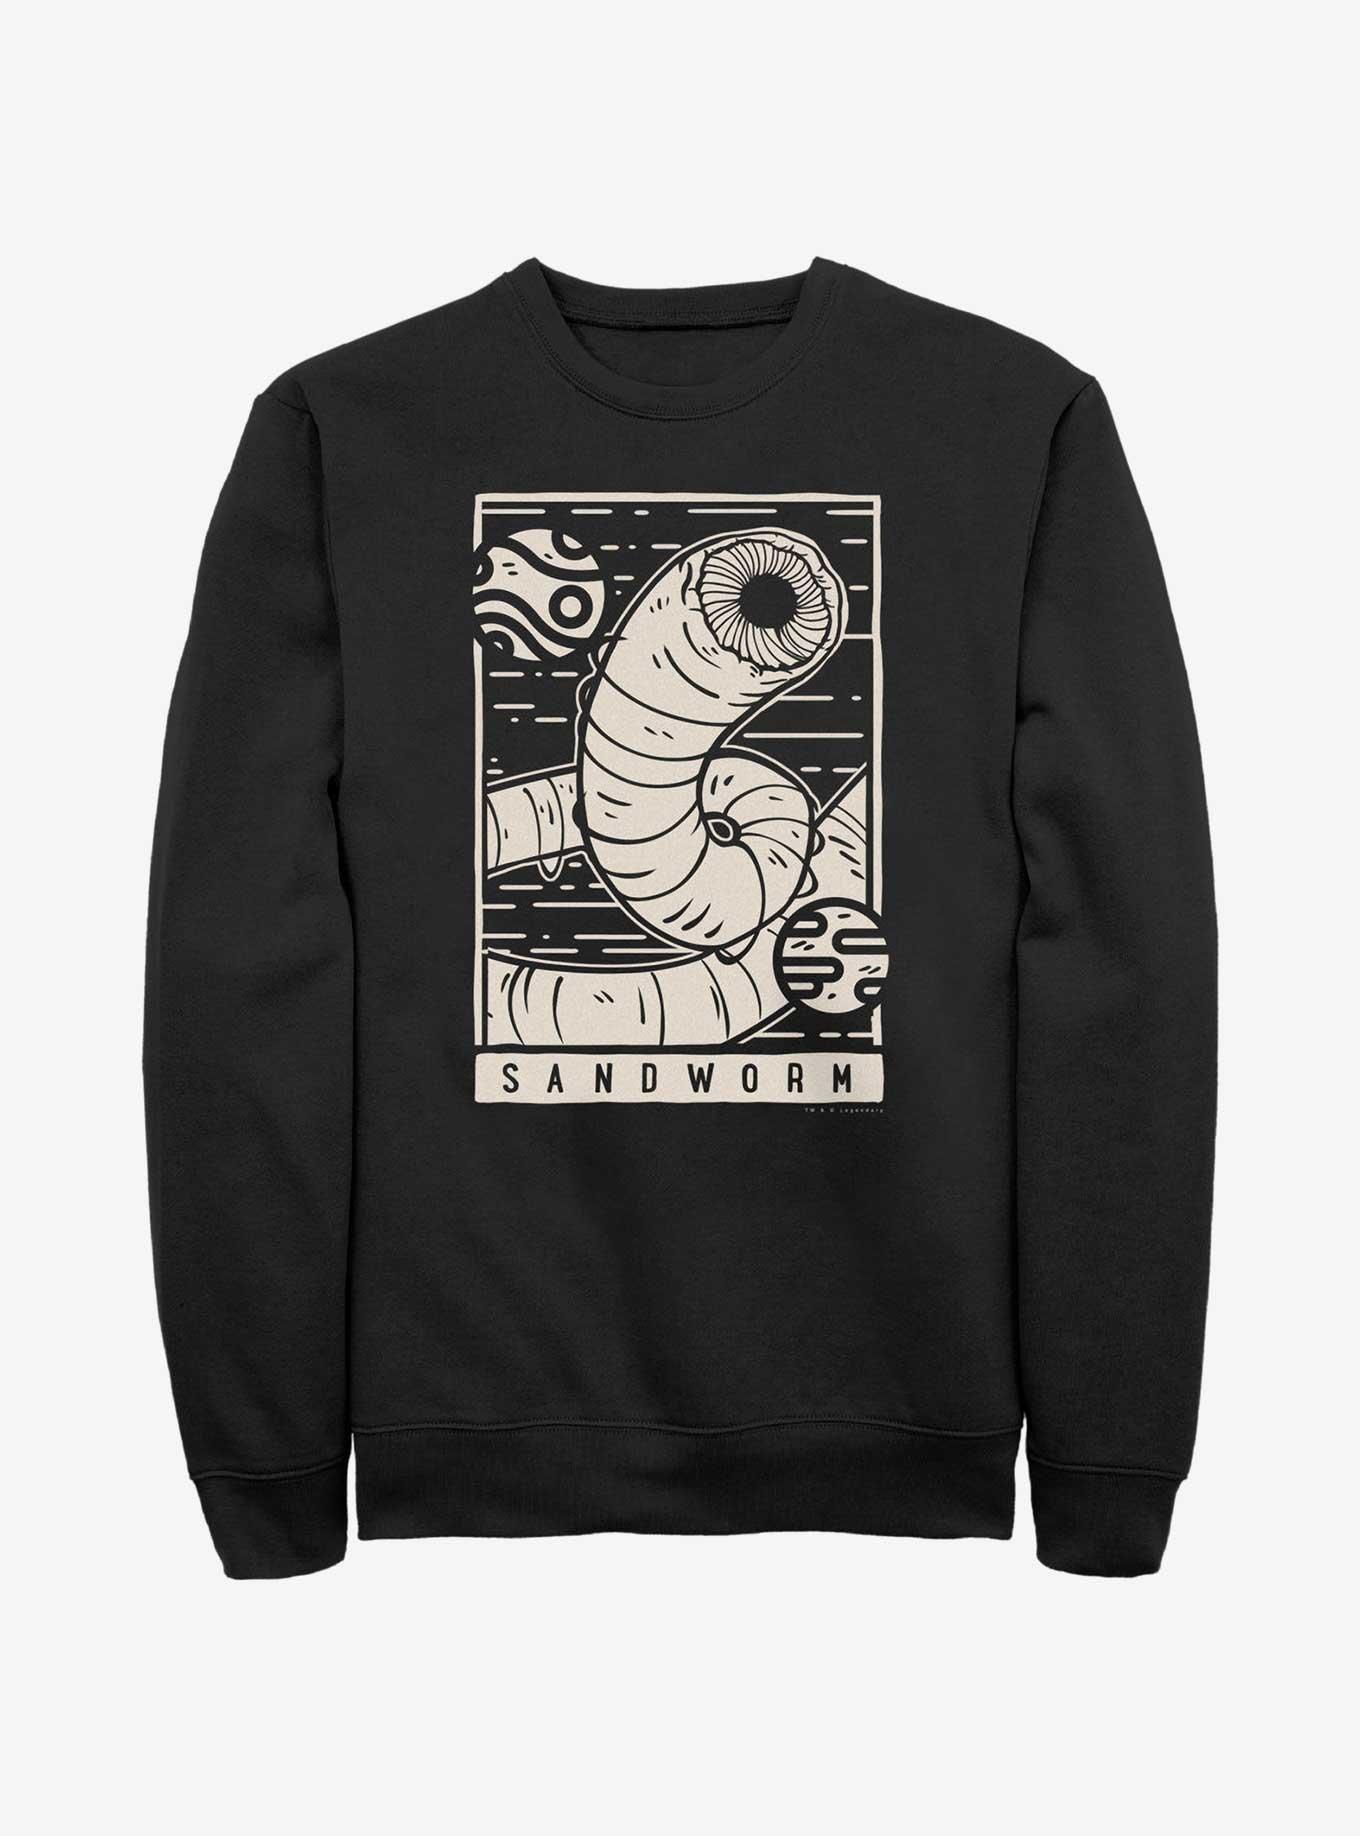 Dune Sandworm Illustration Sweatshirt, BLACK, hi-res